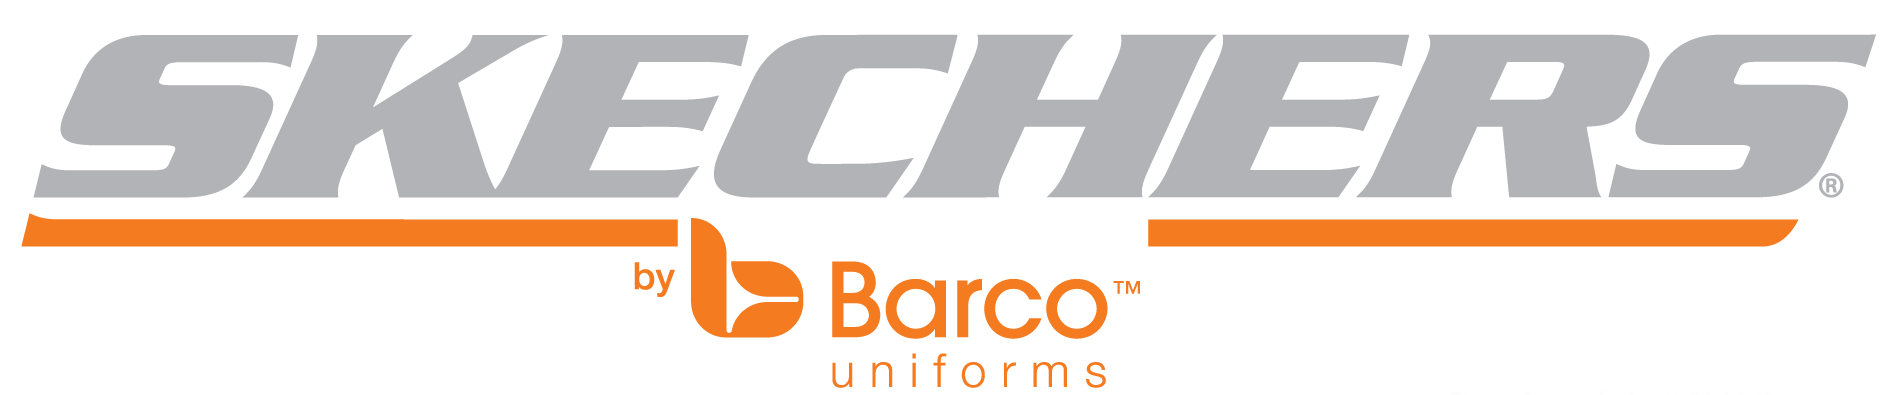 Barco Uniforms Logo - Skechers™ – Barco Uniforms